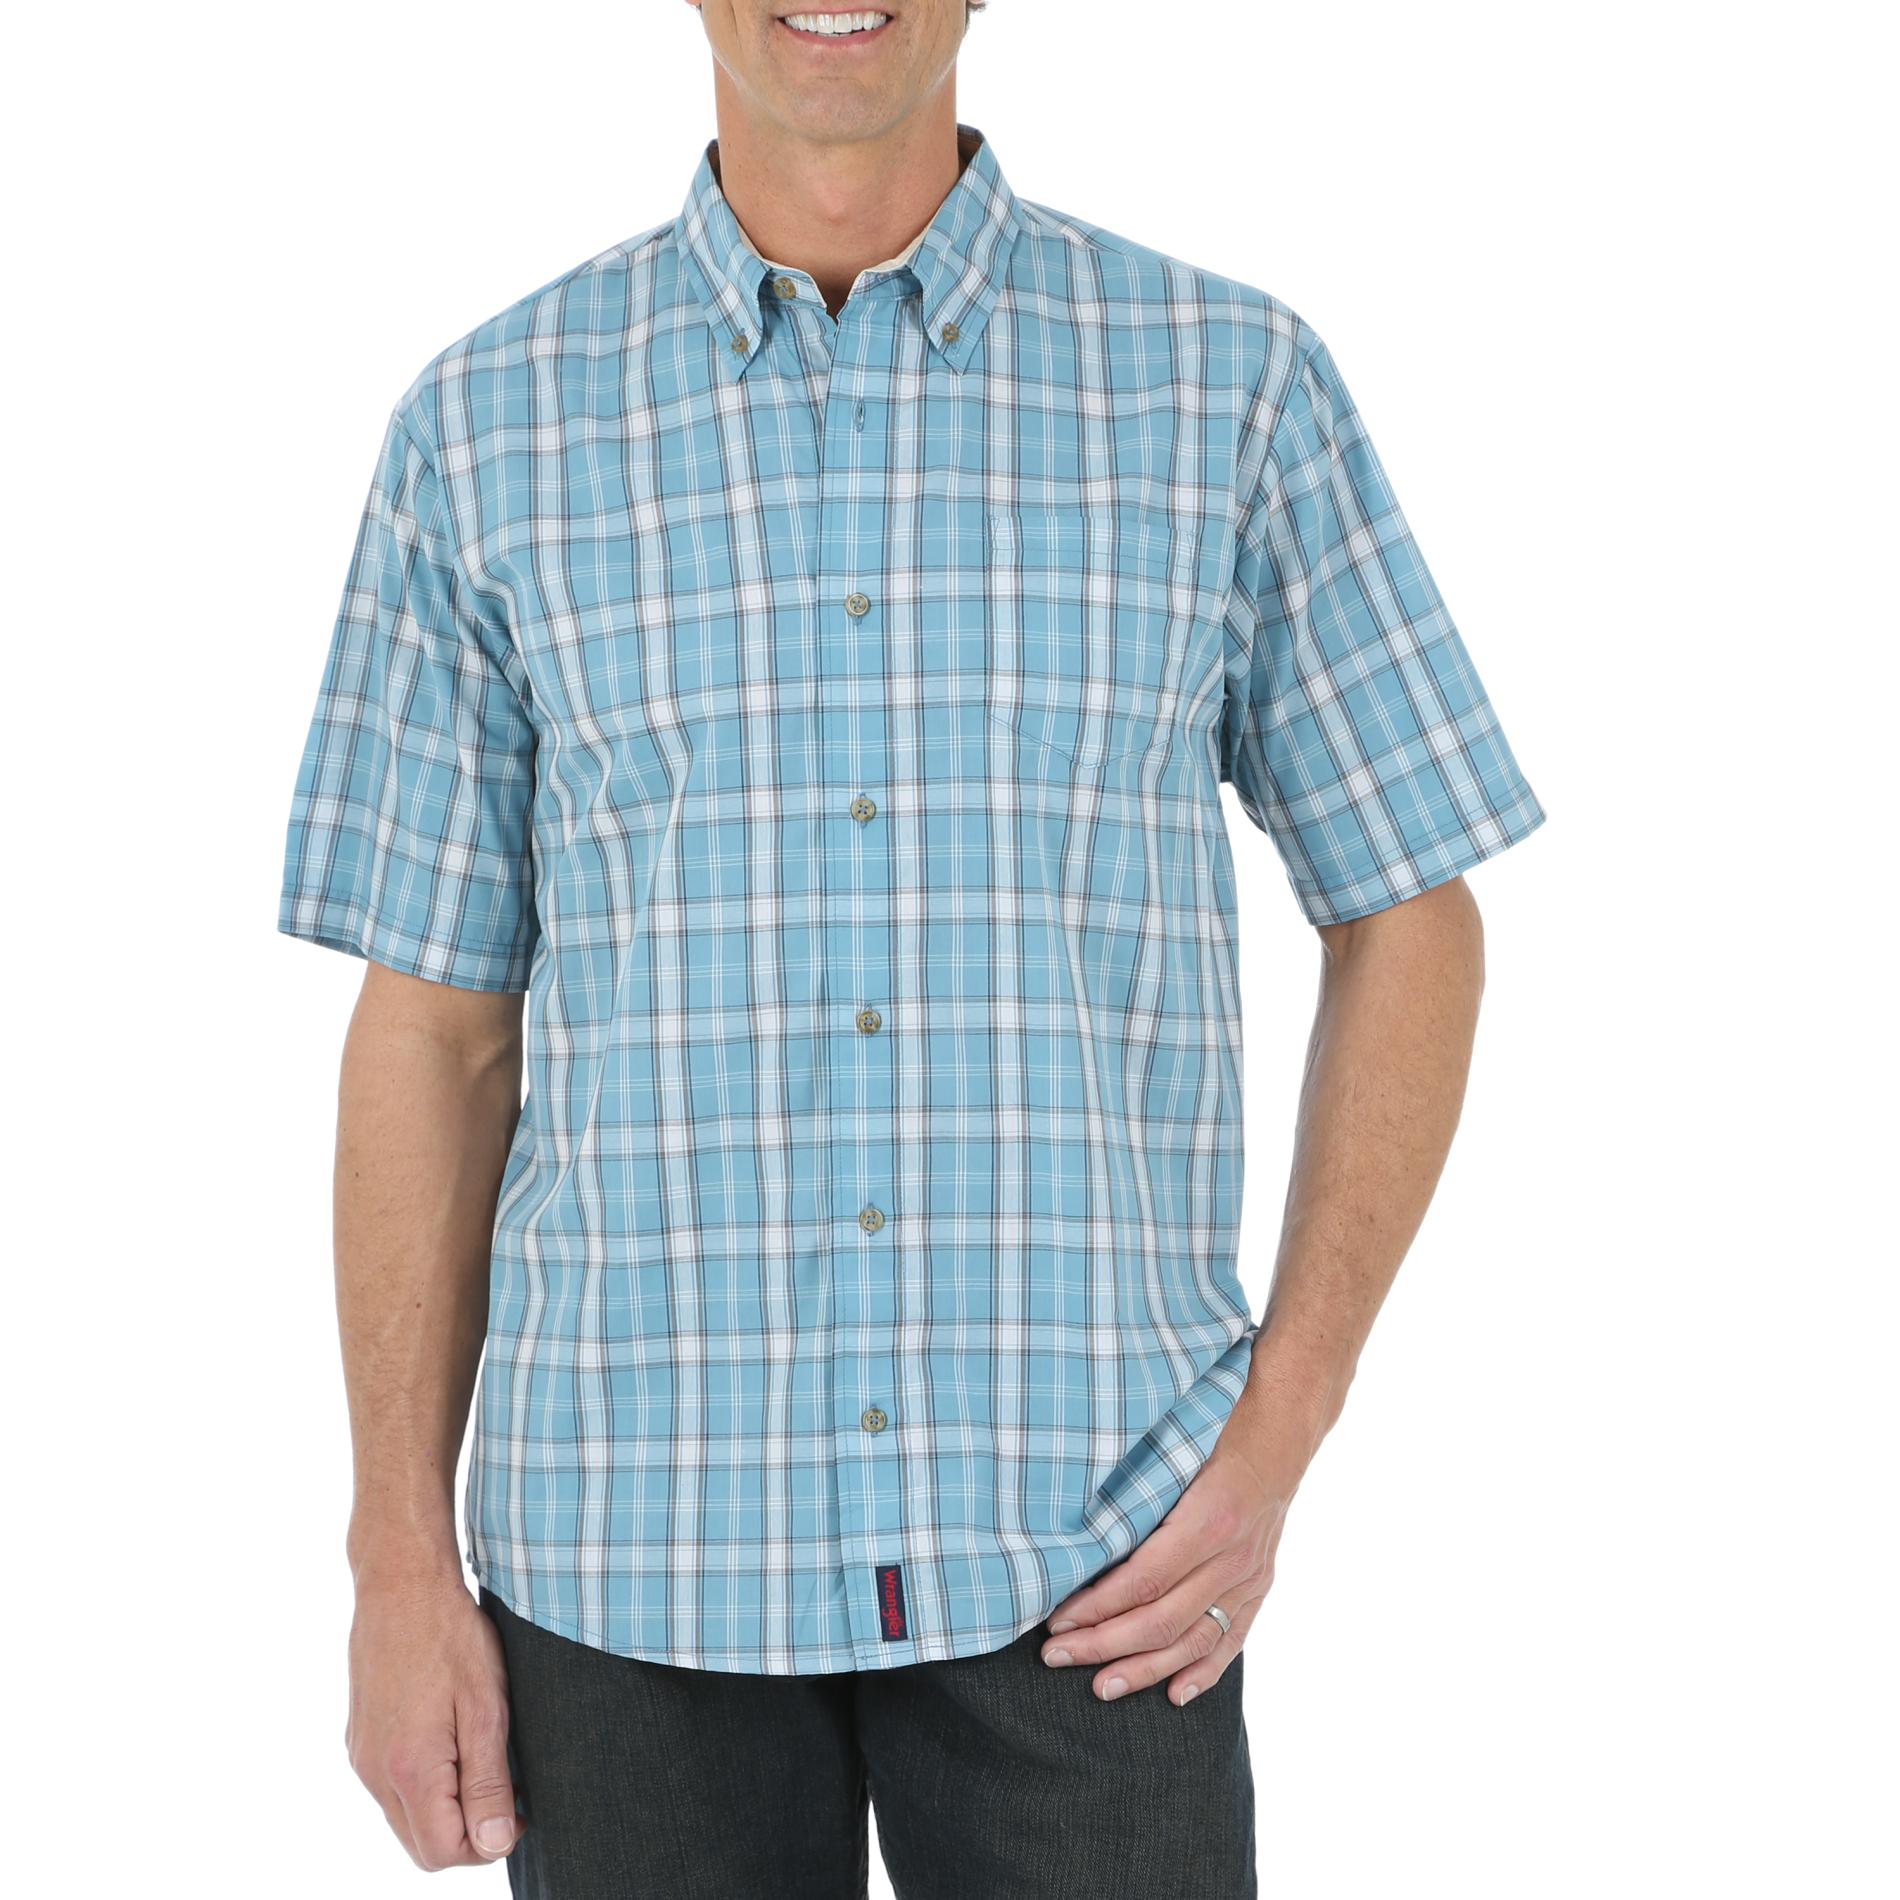 Wrangler Men's Big & Tall Short-Sleeve Button-Front Shirt - Plaid